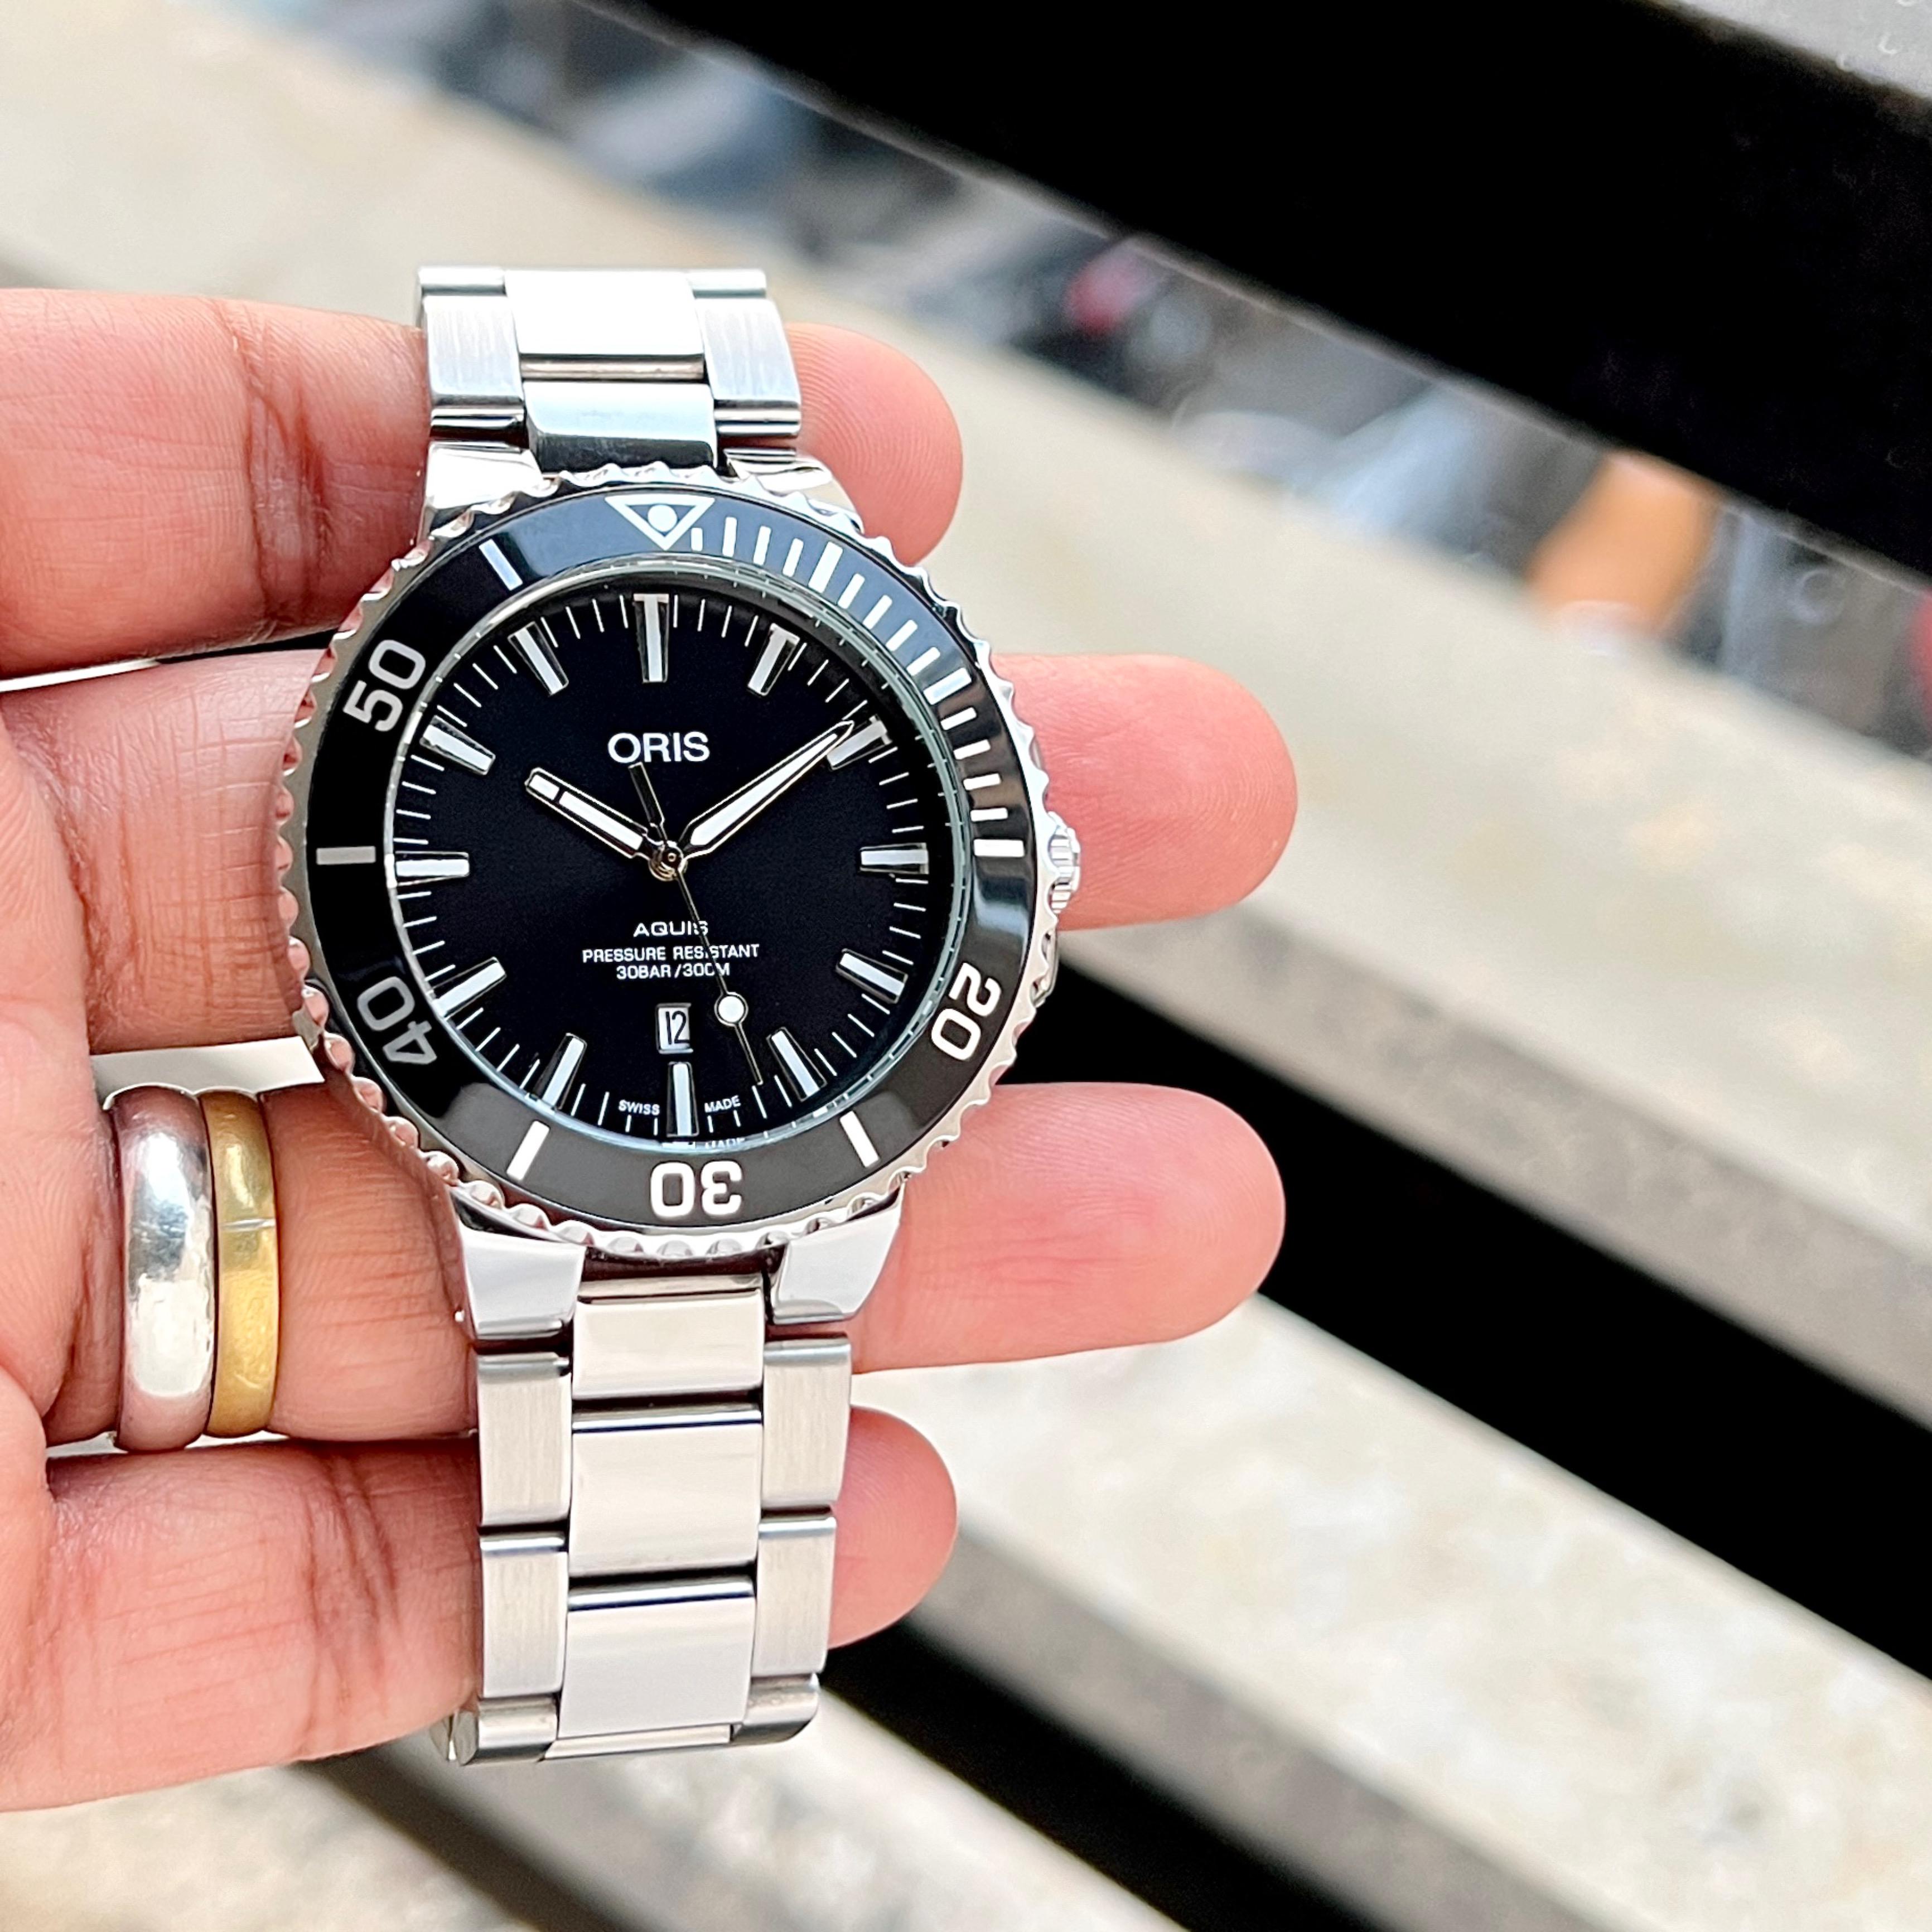 Oris Aquis 7AA Premium Men’s Luxury Dive Watch with Stainless Steel Bracelet and Black Bezel – Elegance Meets Performance [Dial Size – 42mm]